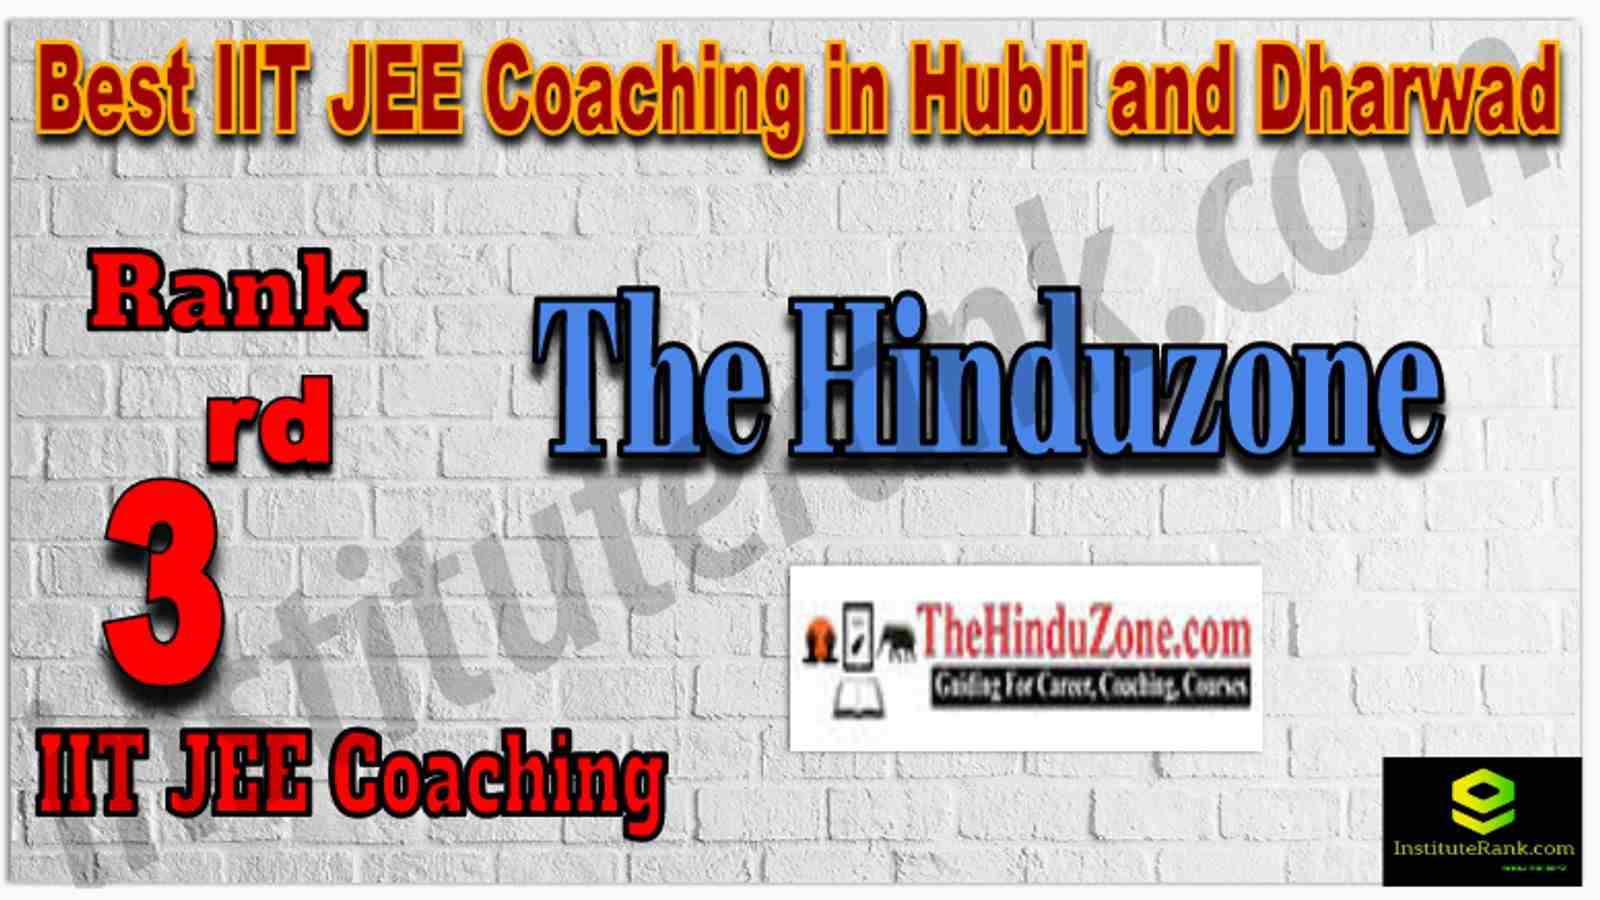 Rank 3rd Best IIT JEE Coaching in Hubli and Dharwad